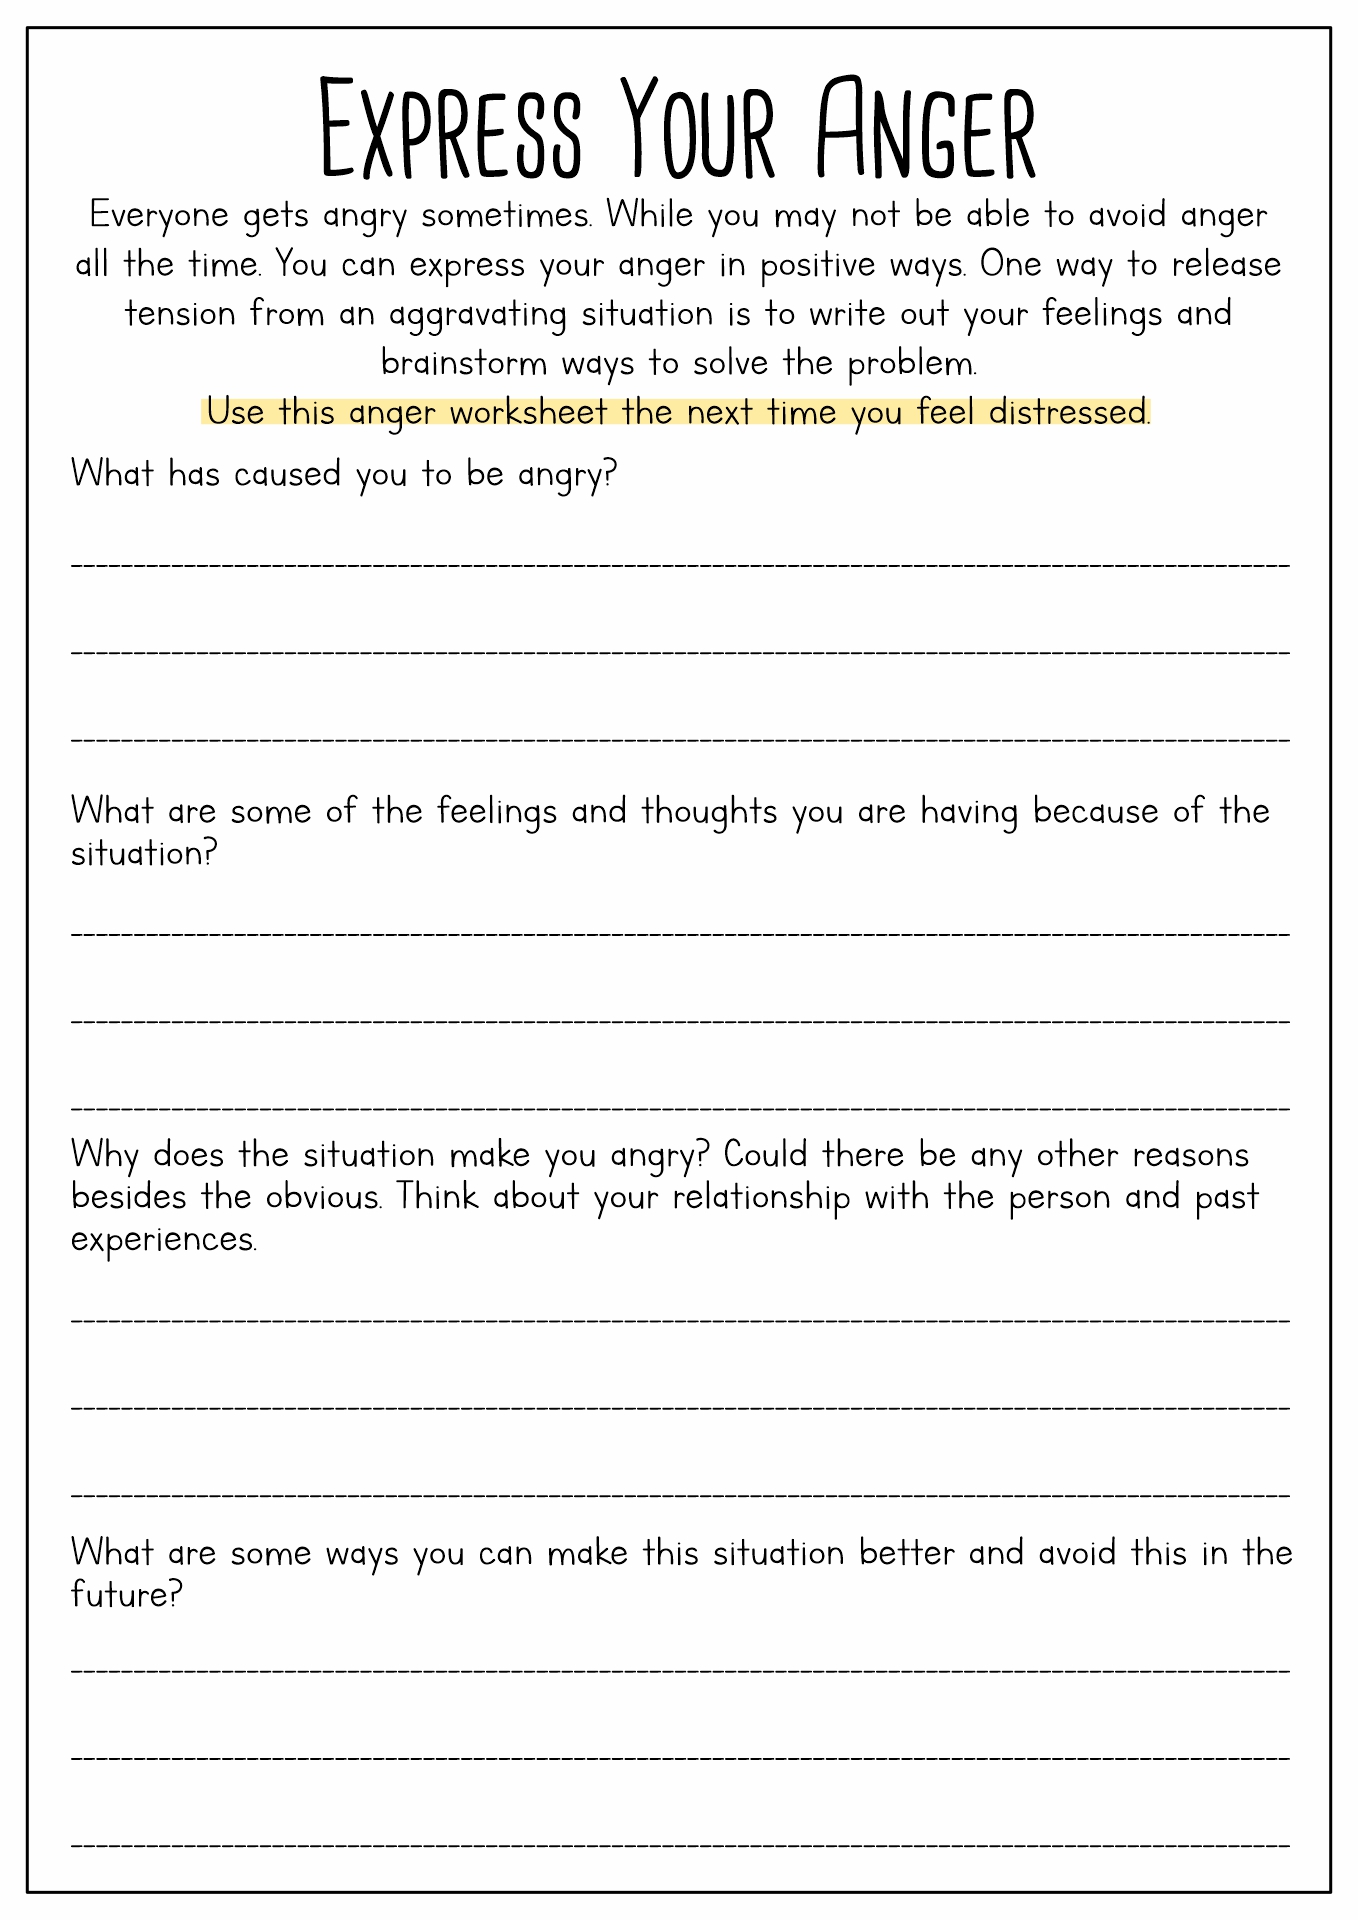 19-best-images-of-anger-worksheets-for-adults-anger-management-skills